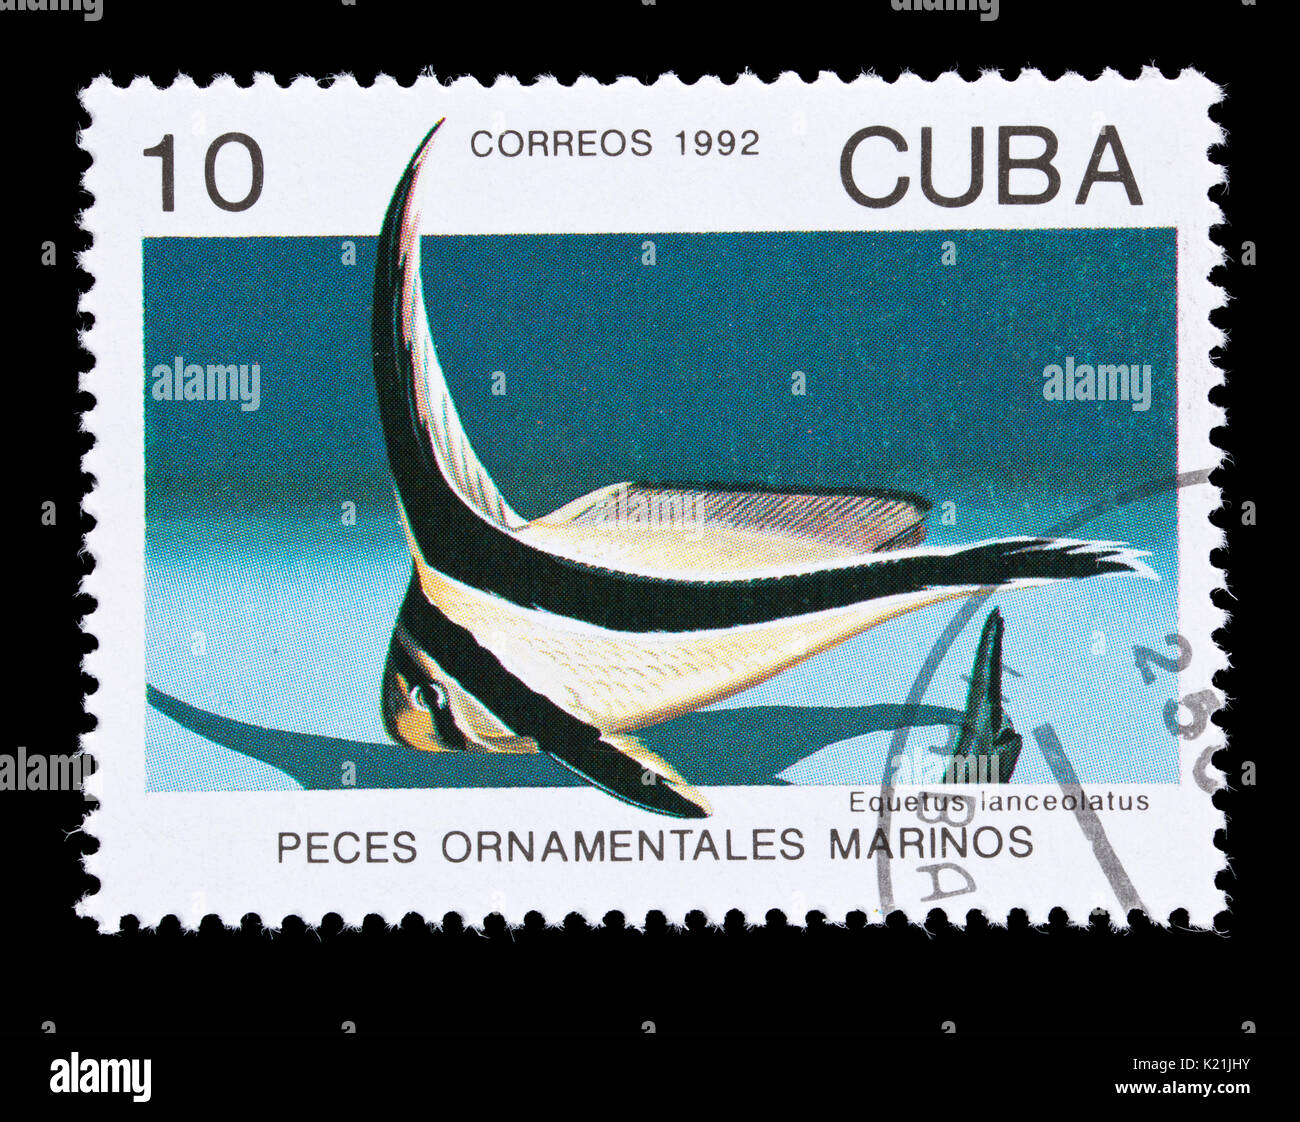 Postage stamp from Cuba depicting a jack-knifefish  (Equetus lanceolatus) Stock Photo